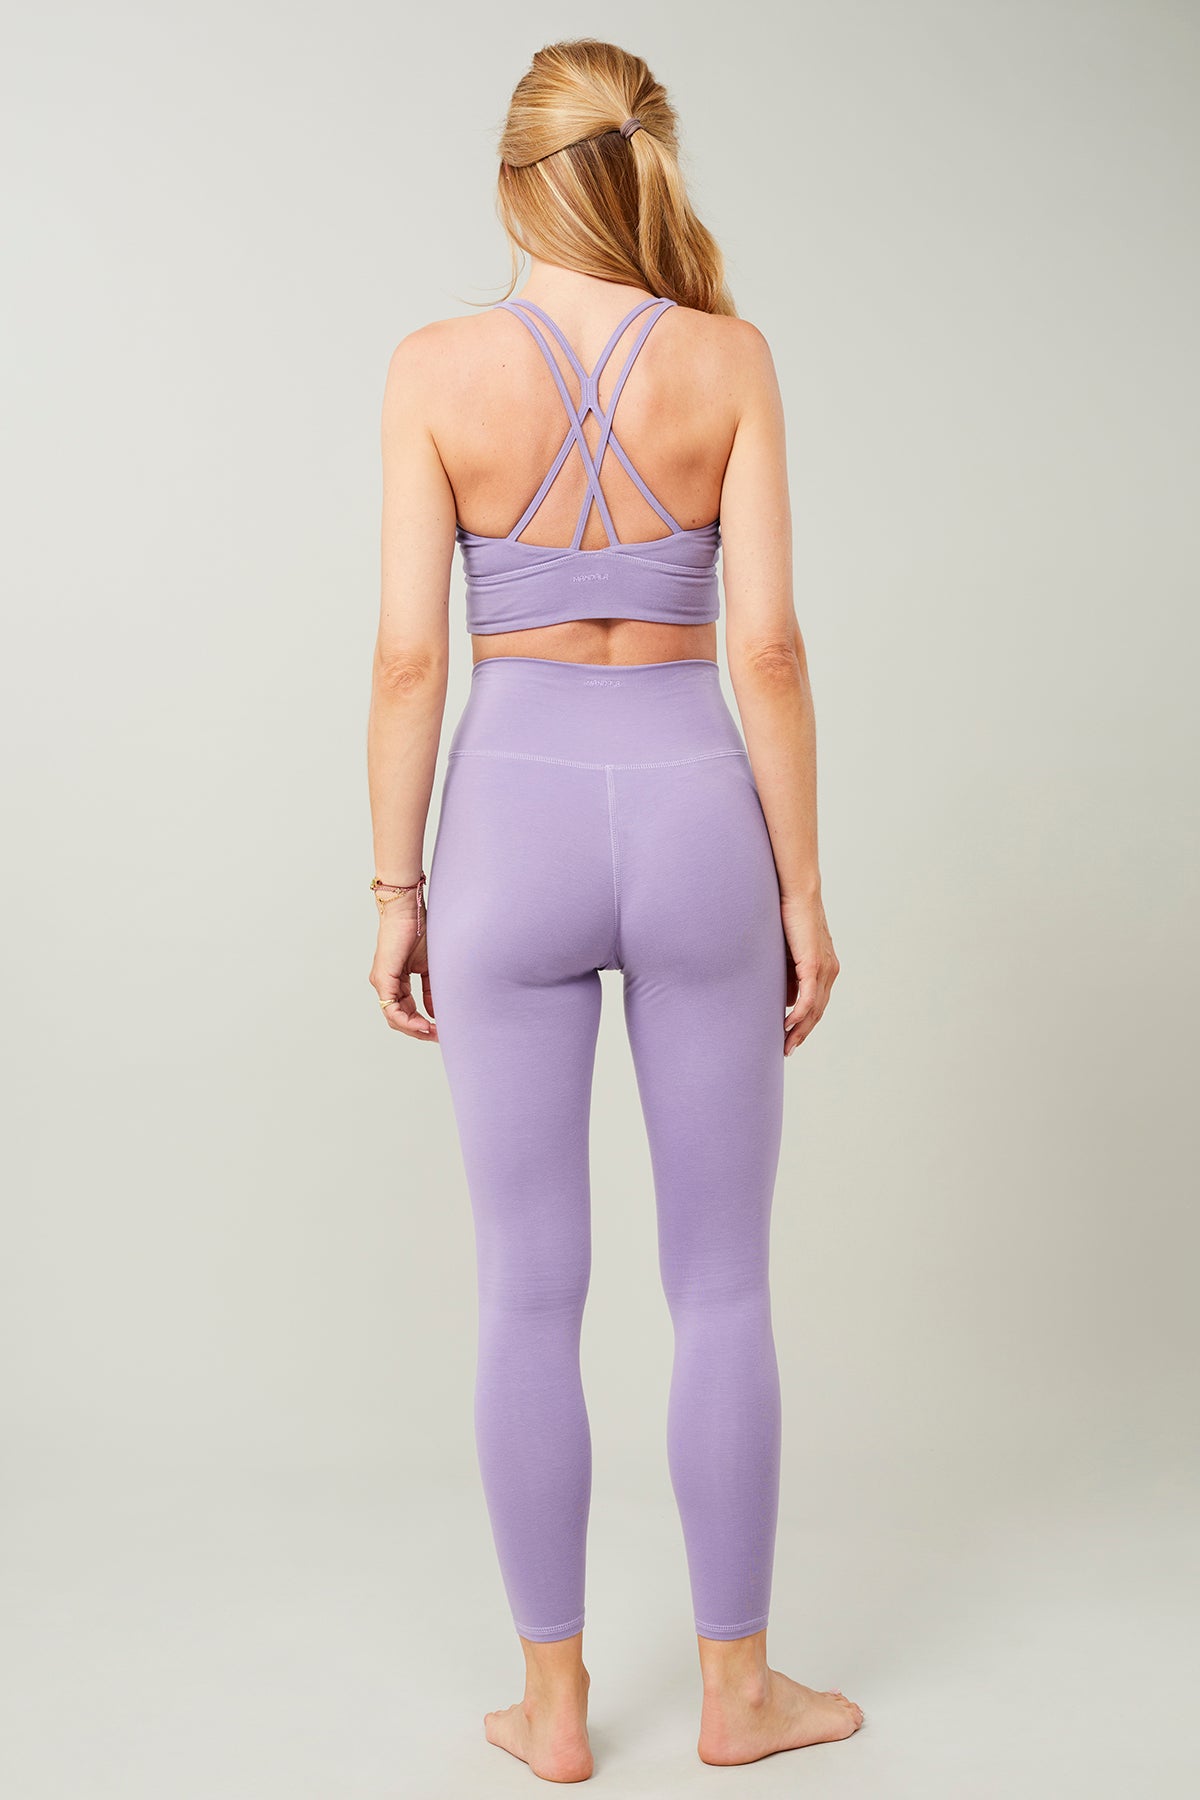 Mandala Yoga Bra Lila Outfit Rückseite - New Studio Bra